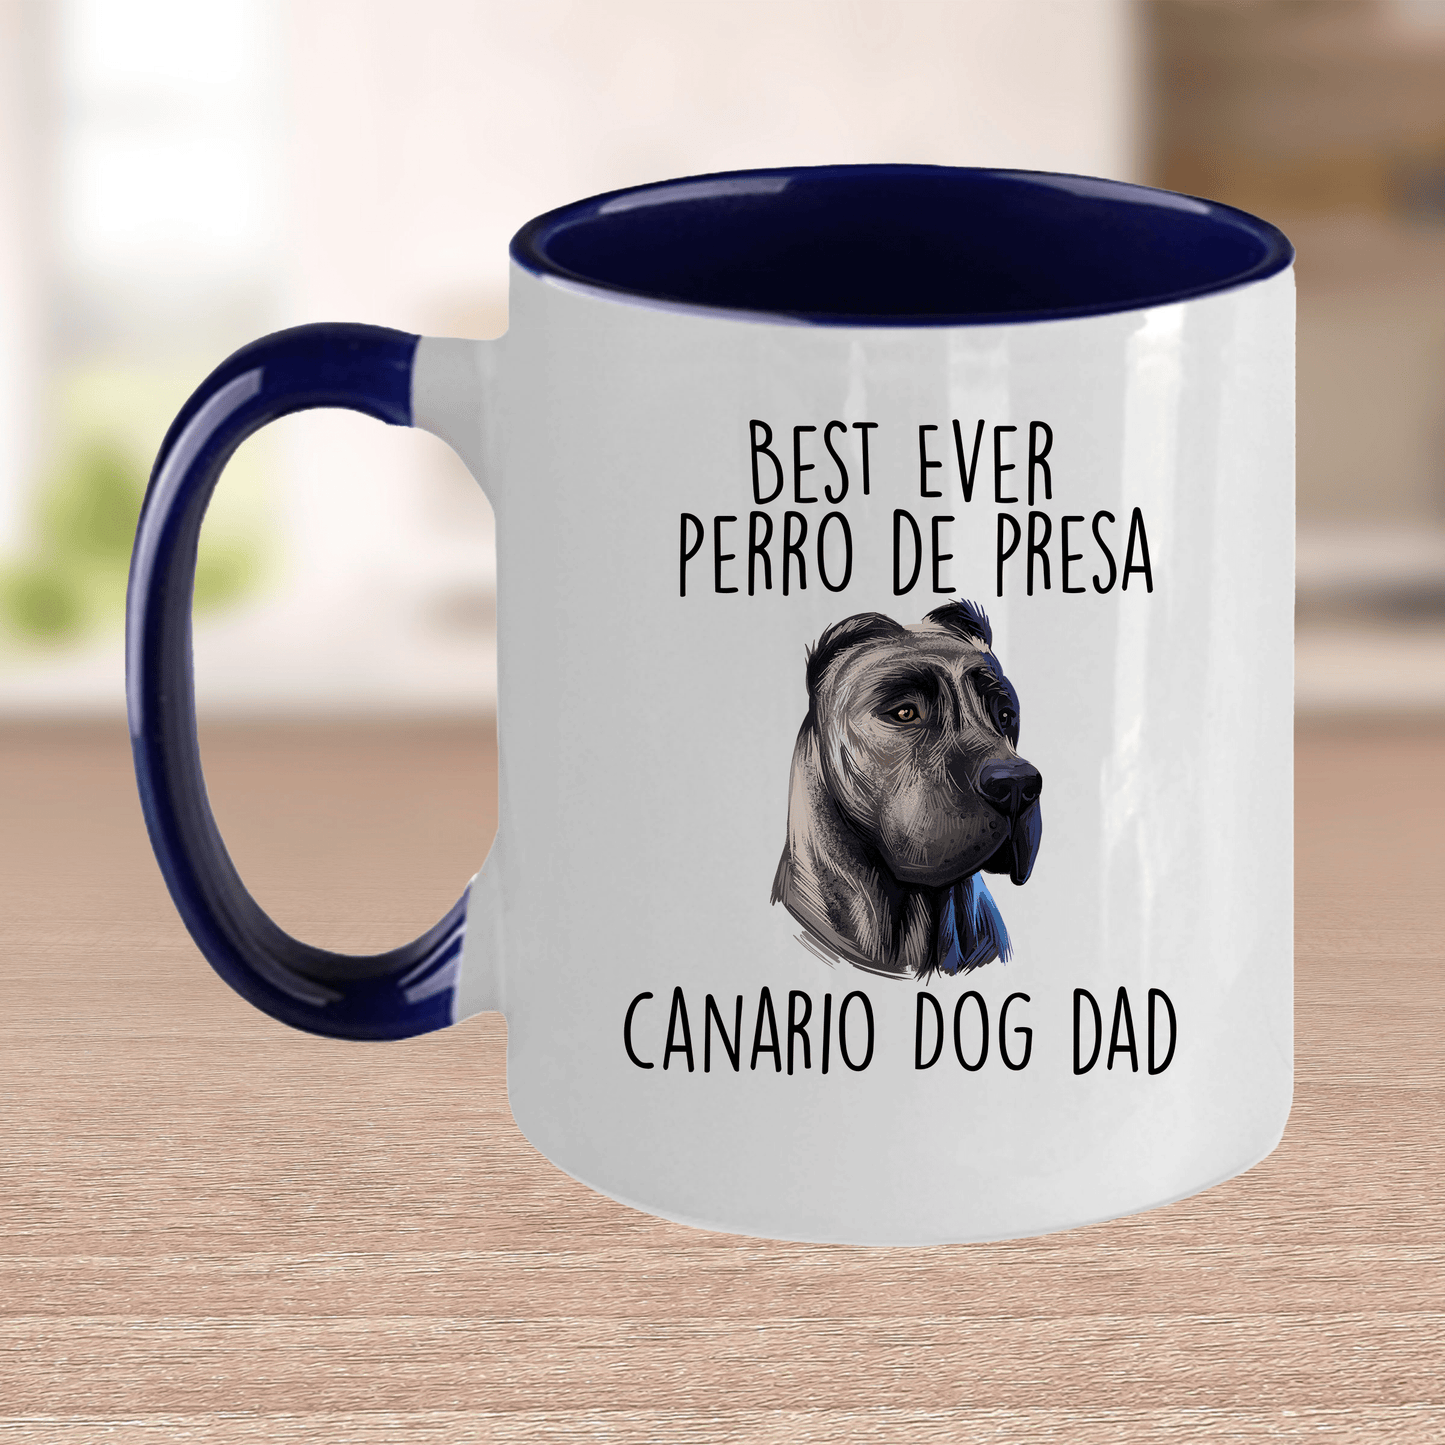 Best Ever Perro de Presa Canario Dog Dad Ceramic Coffee Mug